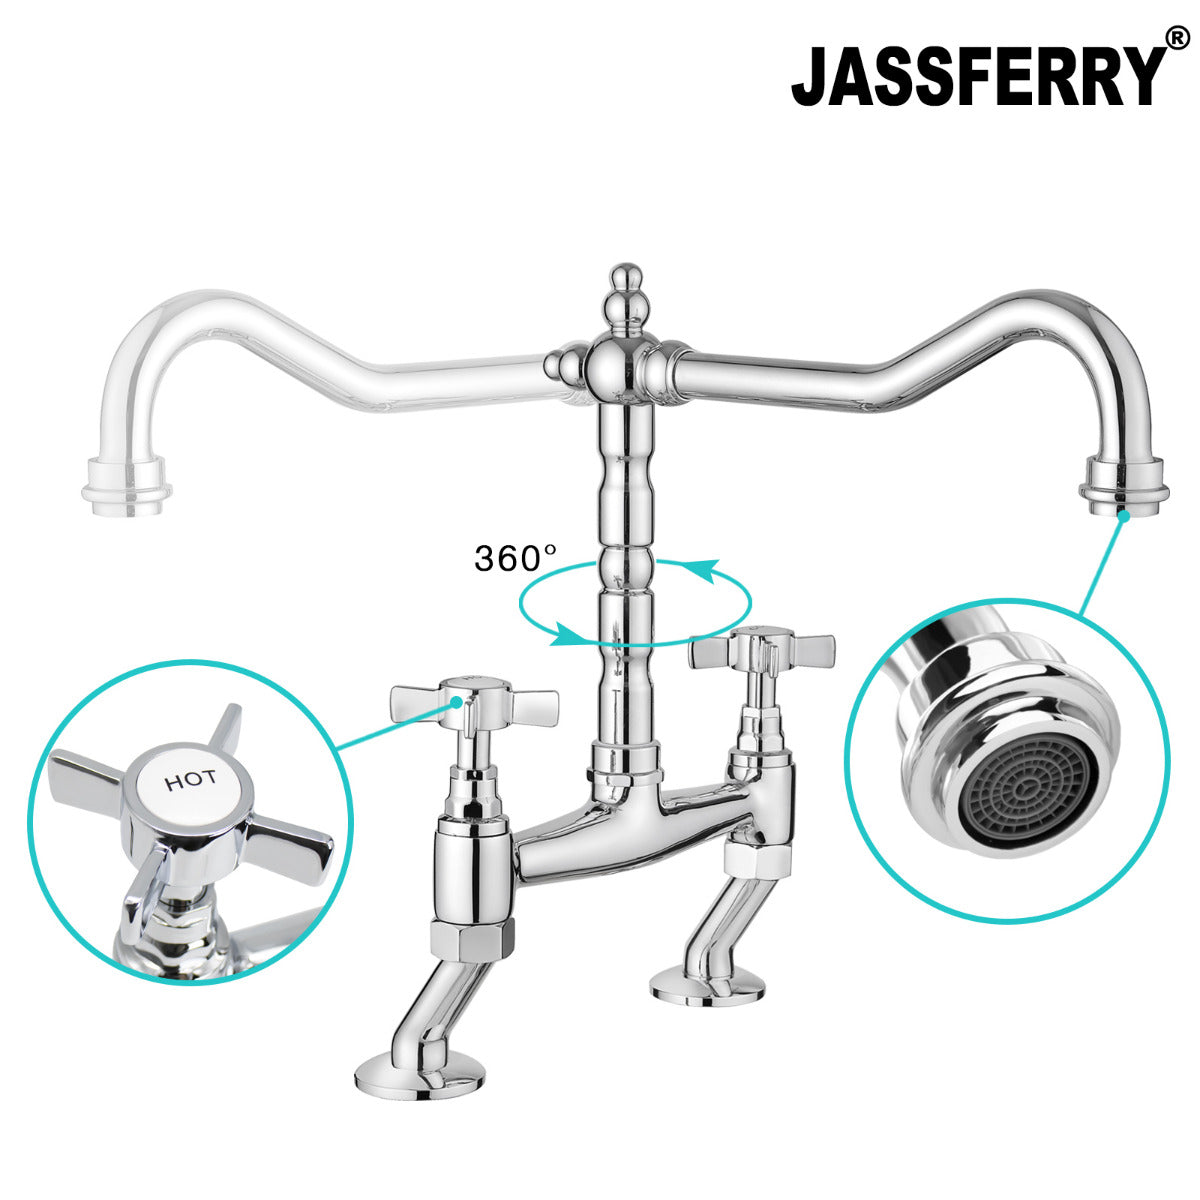 JassferryJASSFERRY Kitchen Tap 2 Hole Mixer Tap with Swivel Spout Traditional RenaissanceKitchen taps